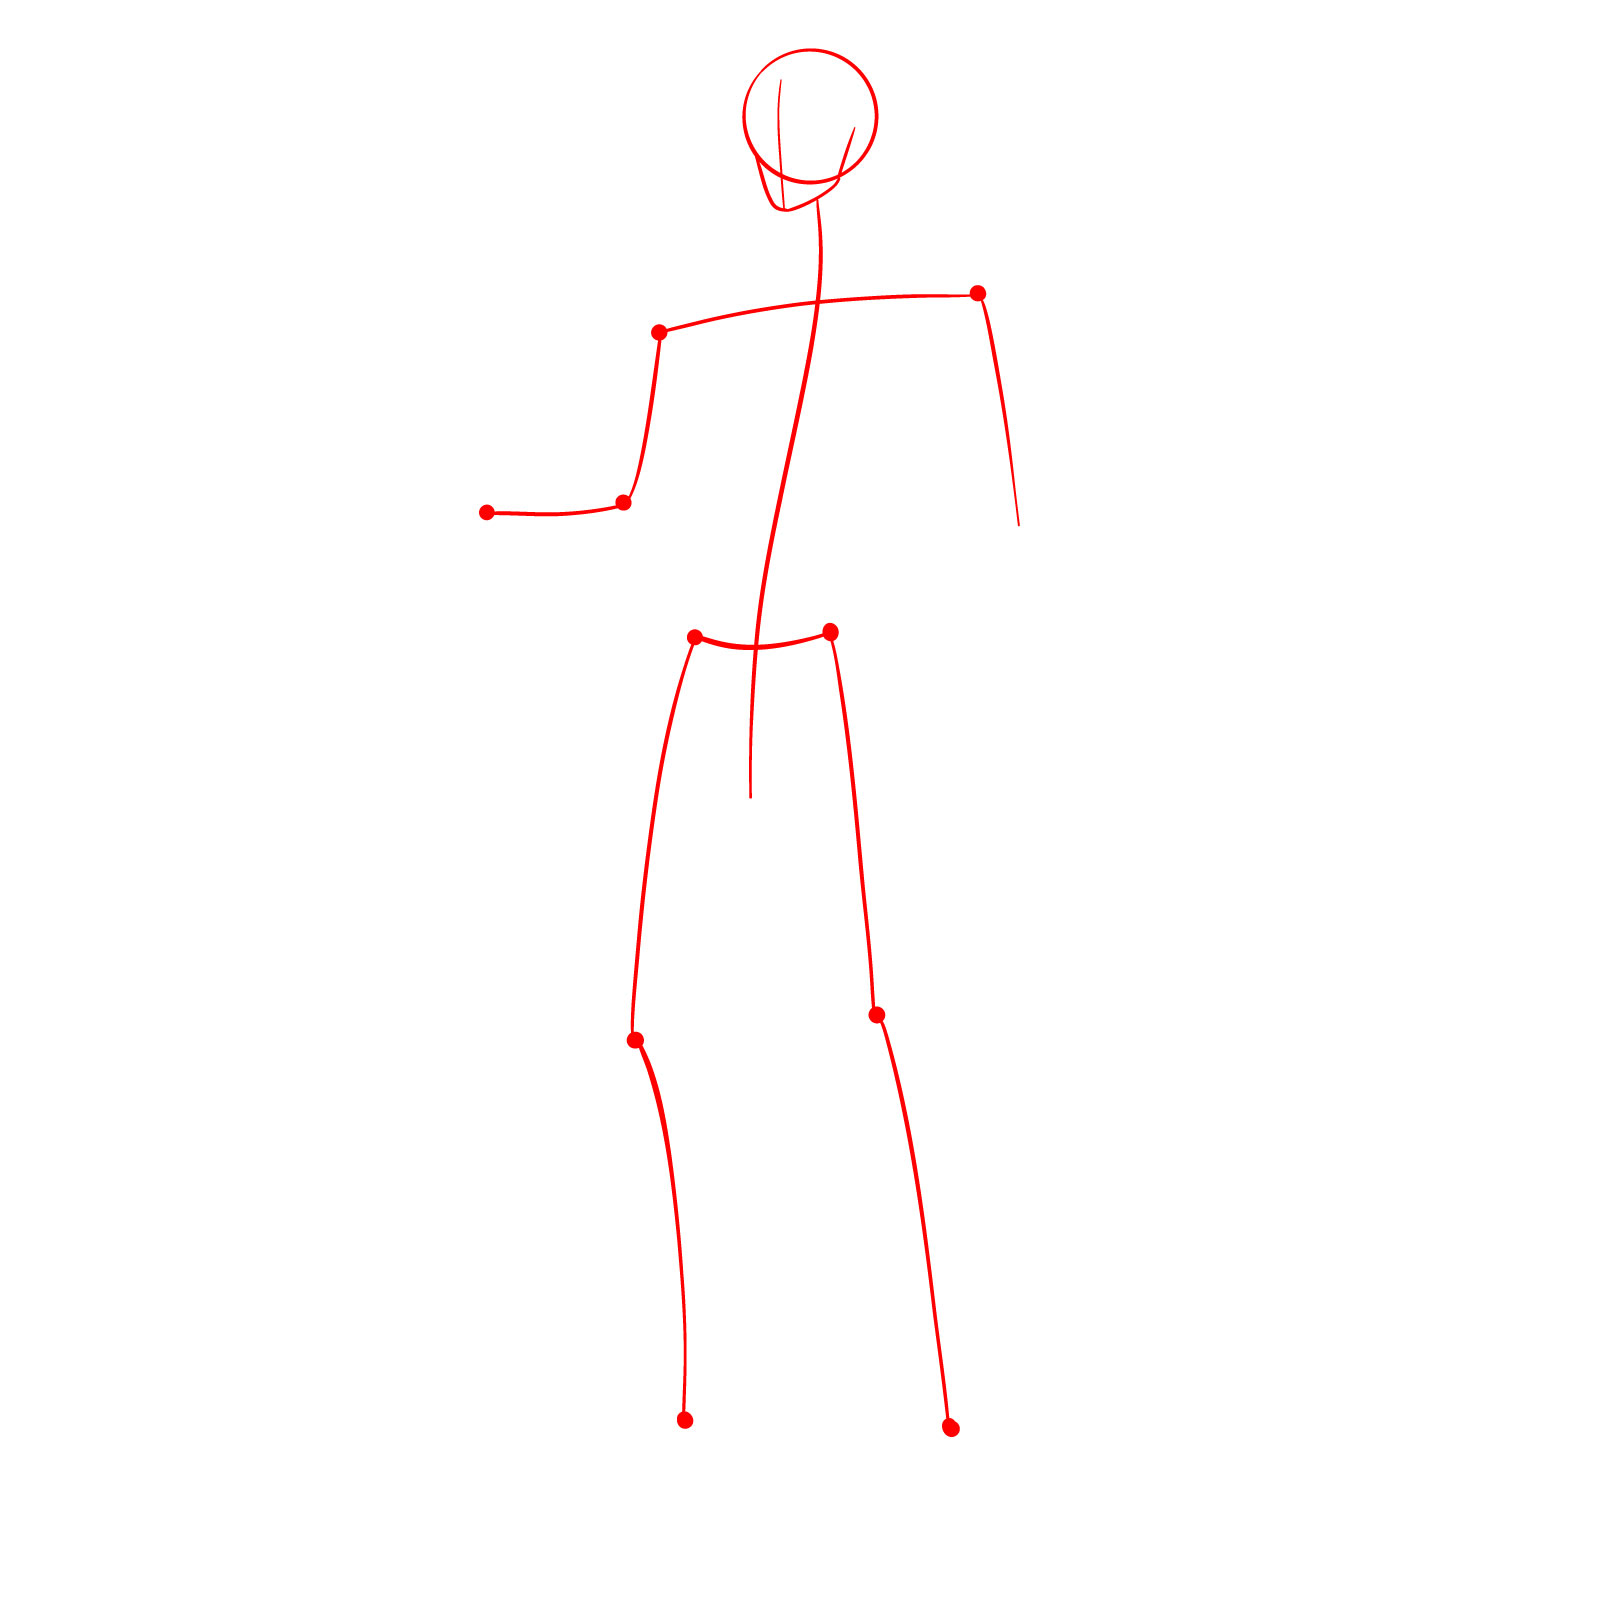 Basic head shape and stick figure outline for a male paladin pose - step 01